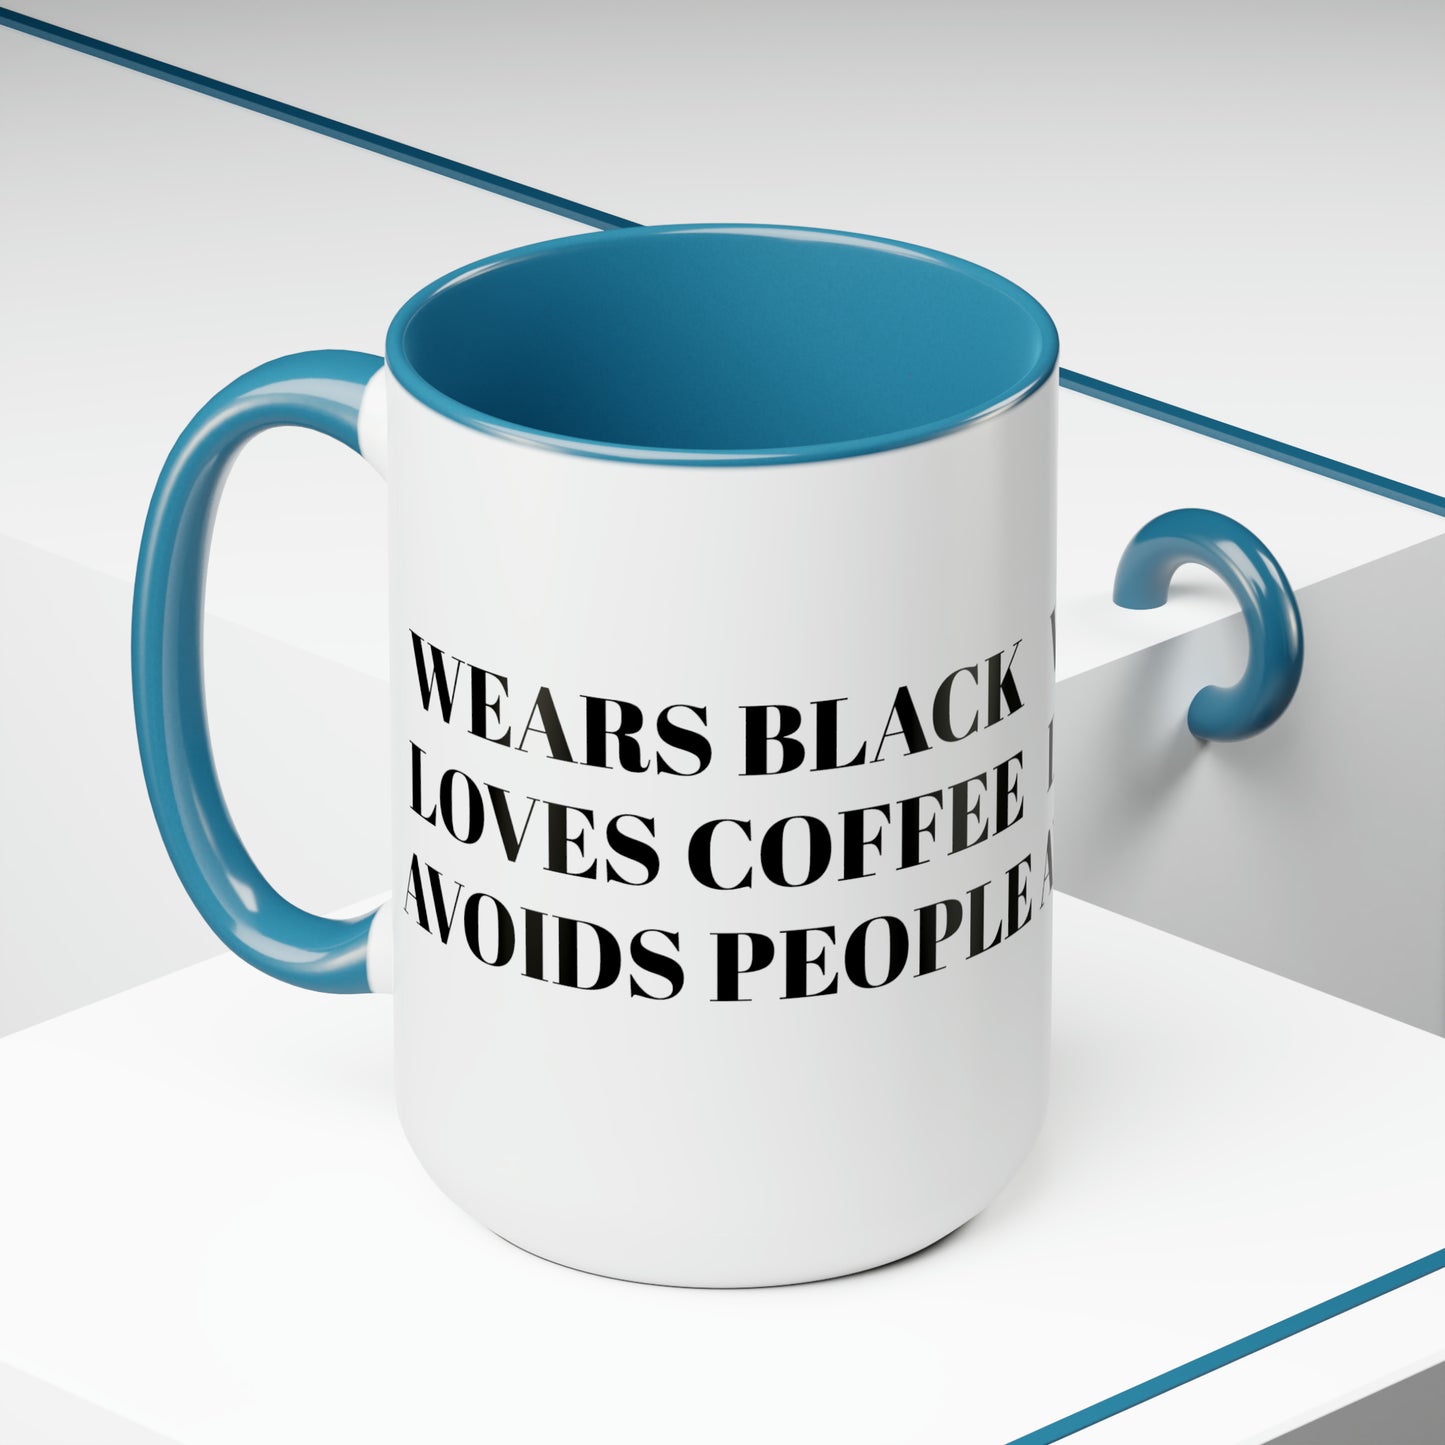 Wears Black Two-Tone Coffee Mugs, 15oz